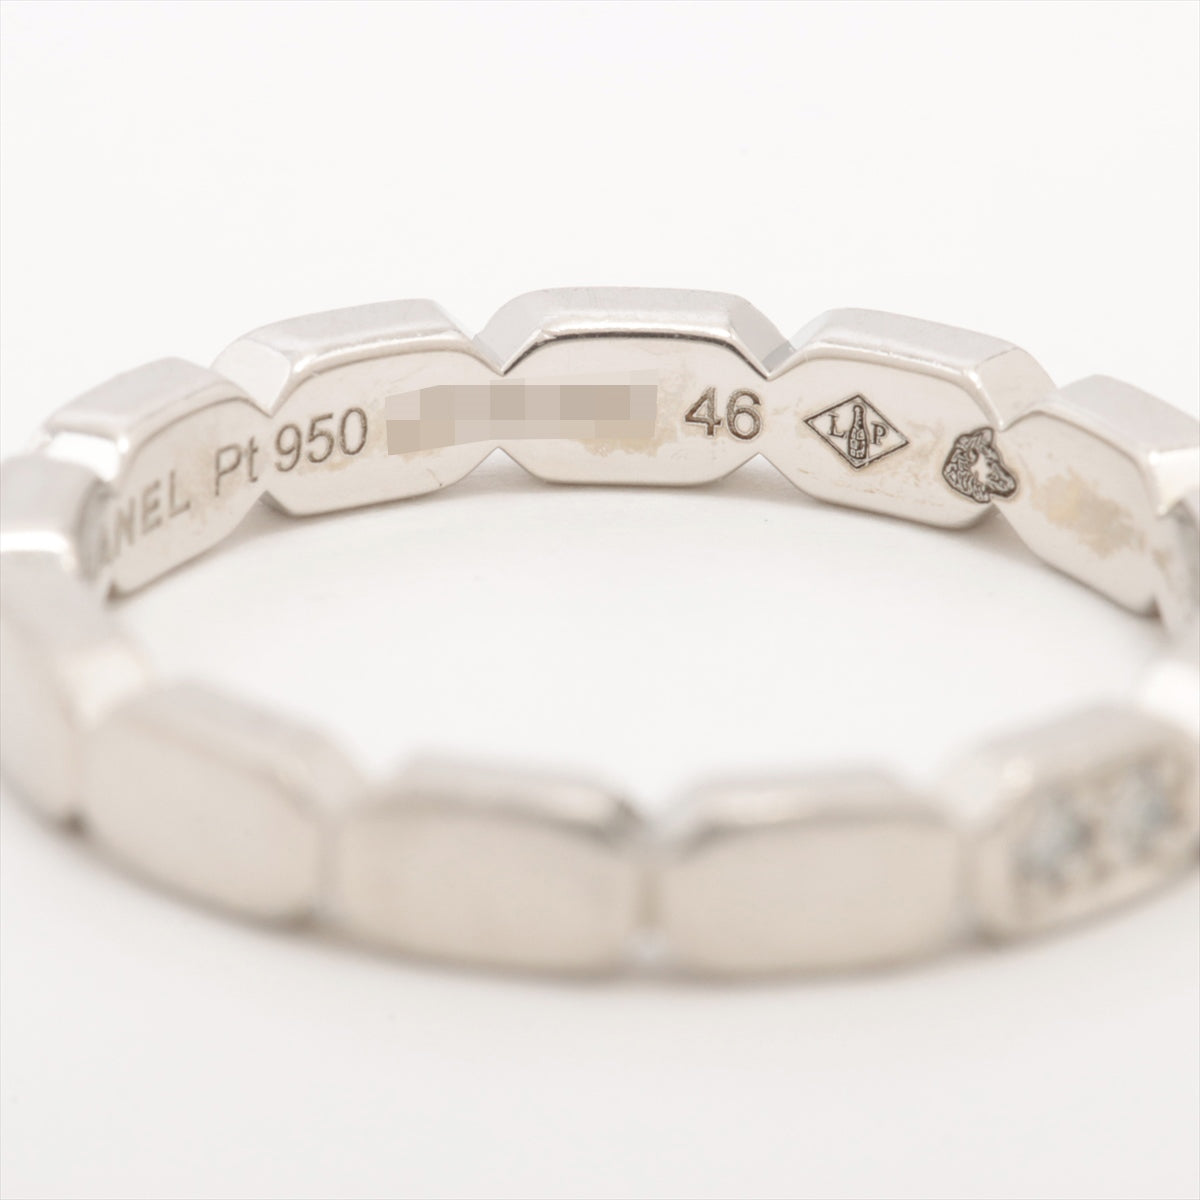 Chanel Première Promesse wedding Diamond Ring Pt950 3.2g 46